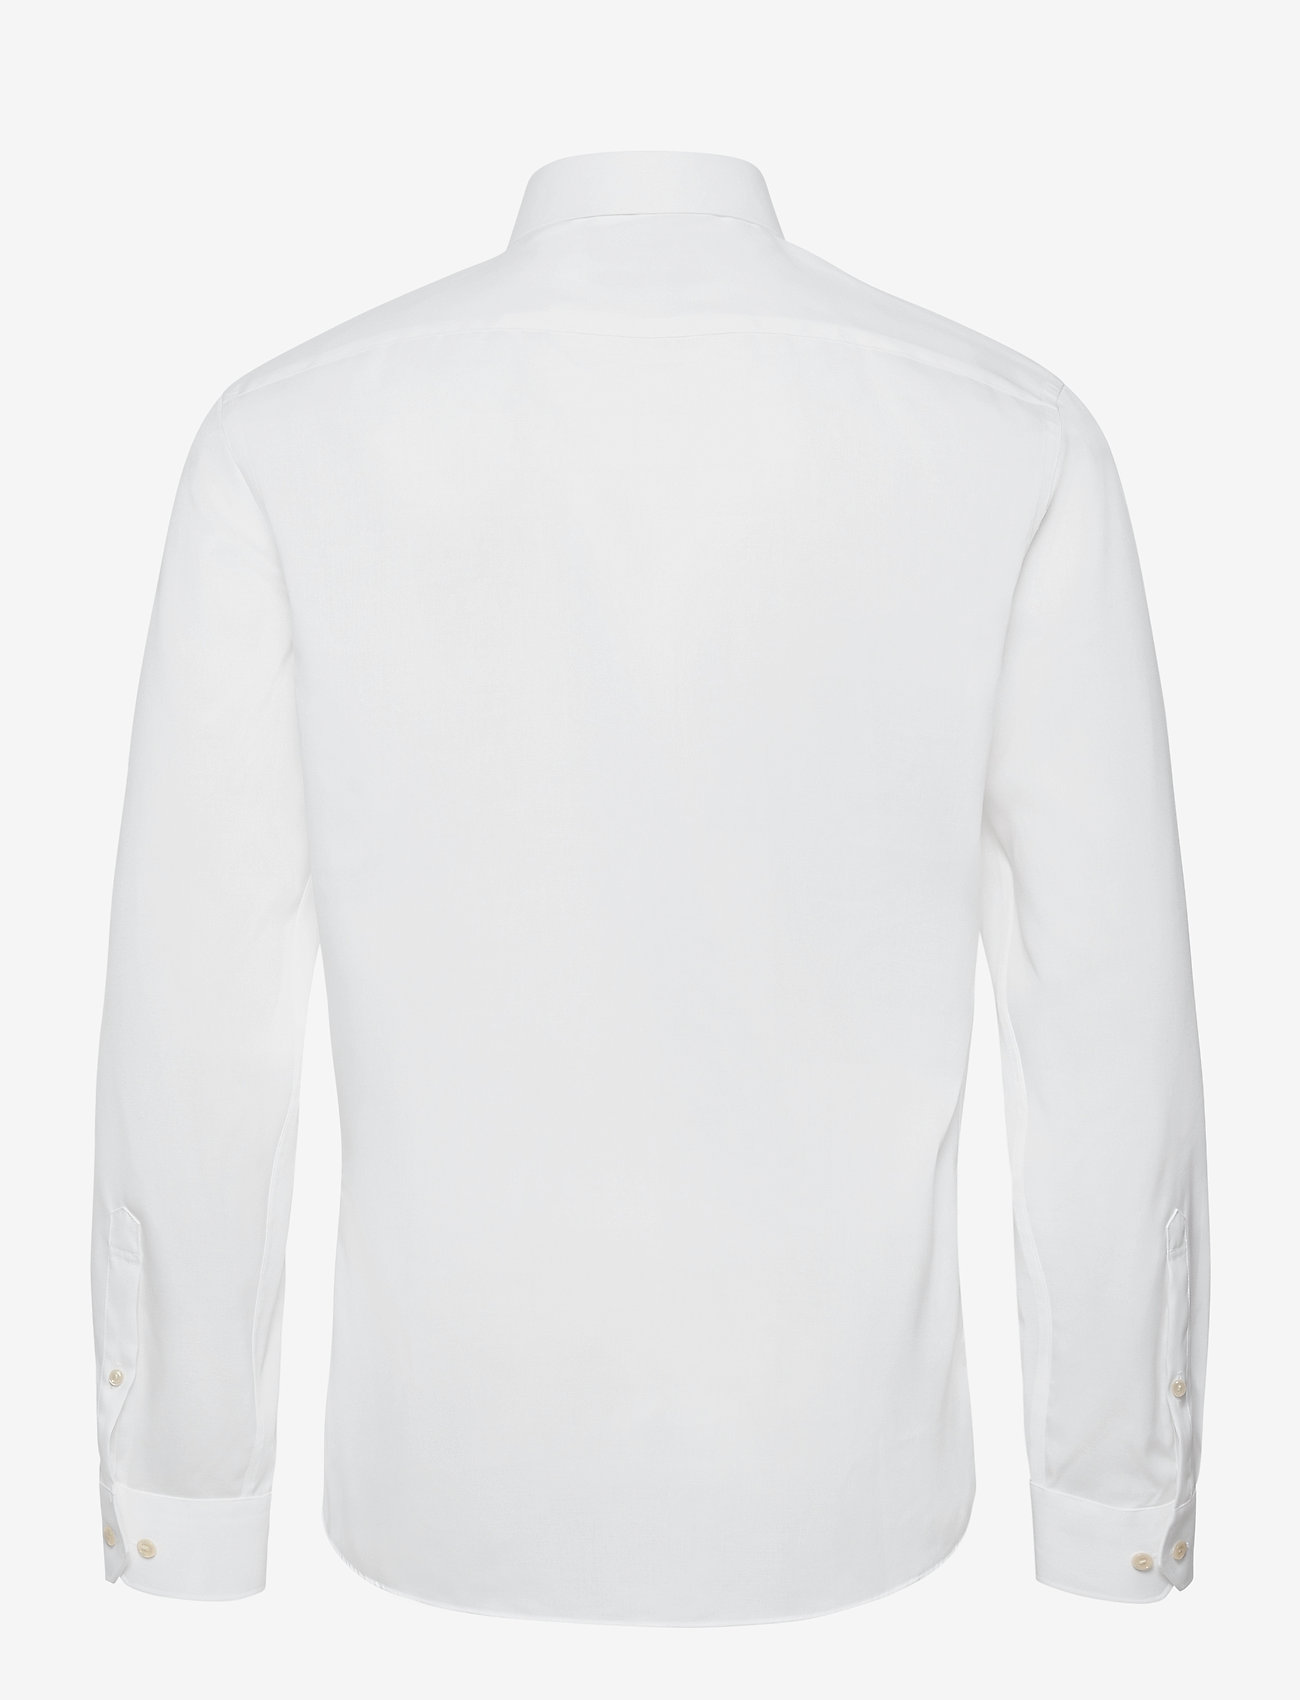 Lindbergh Black - Plain fine twill shirt, WF LS - peruskauluspaidat - white - 1